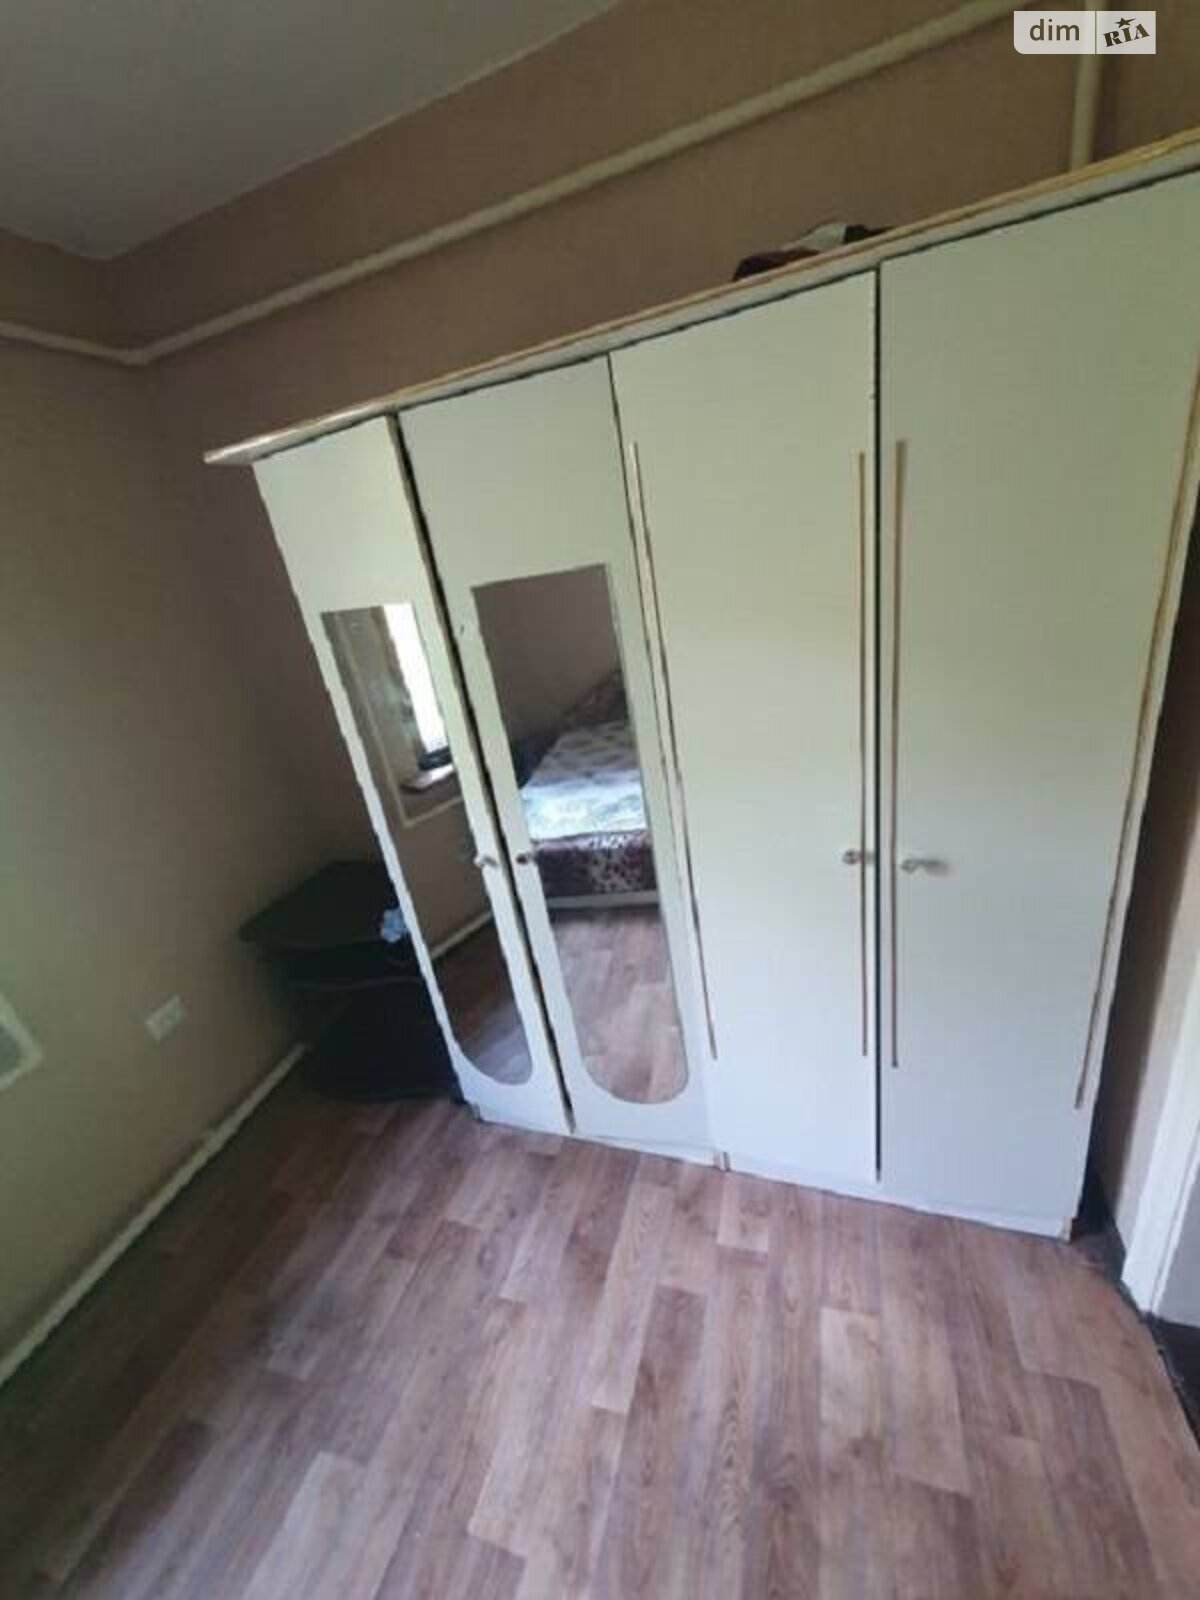 Продажа части дома в Одессе, переулок Москвина, 3 комнаты фото 1